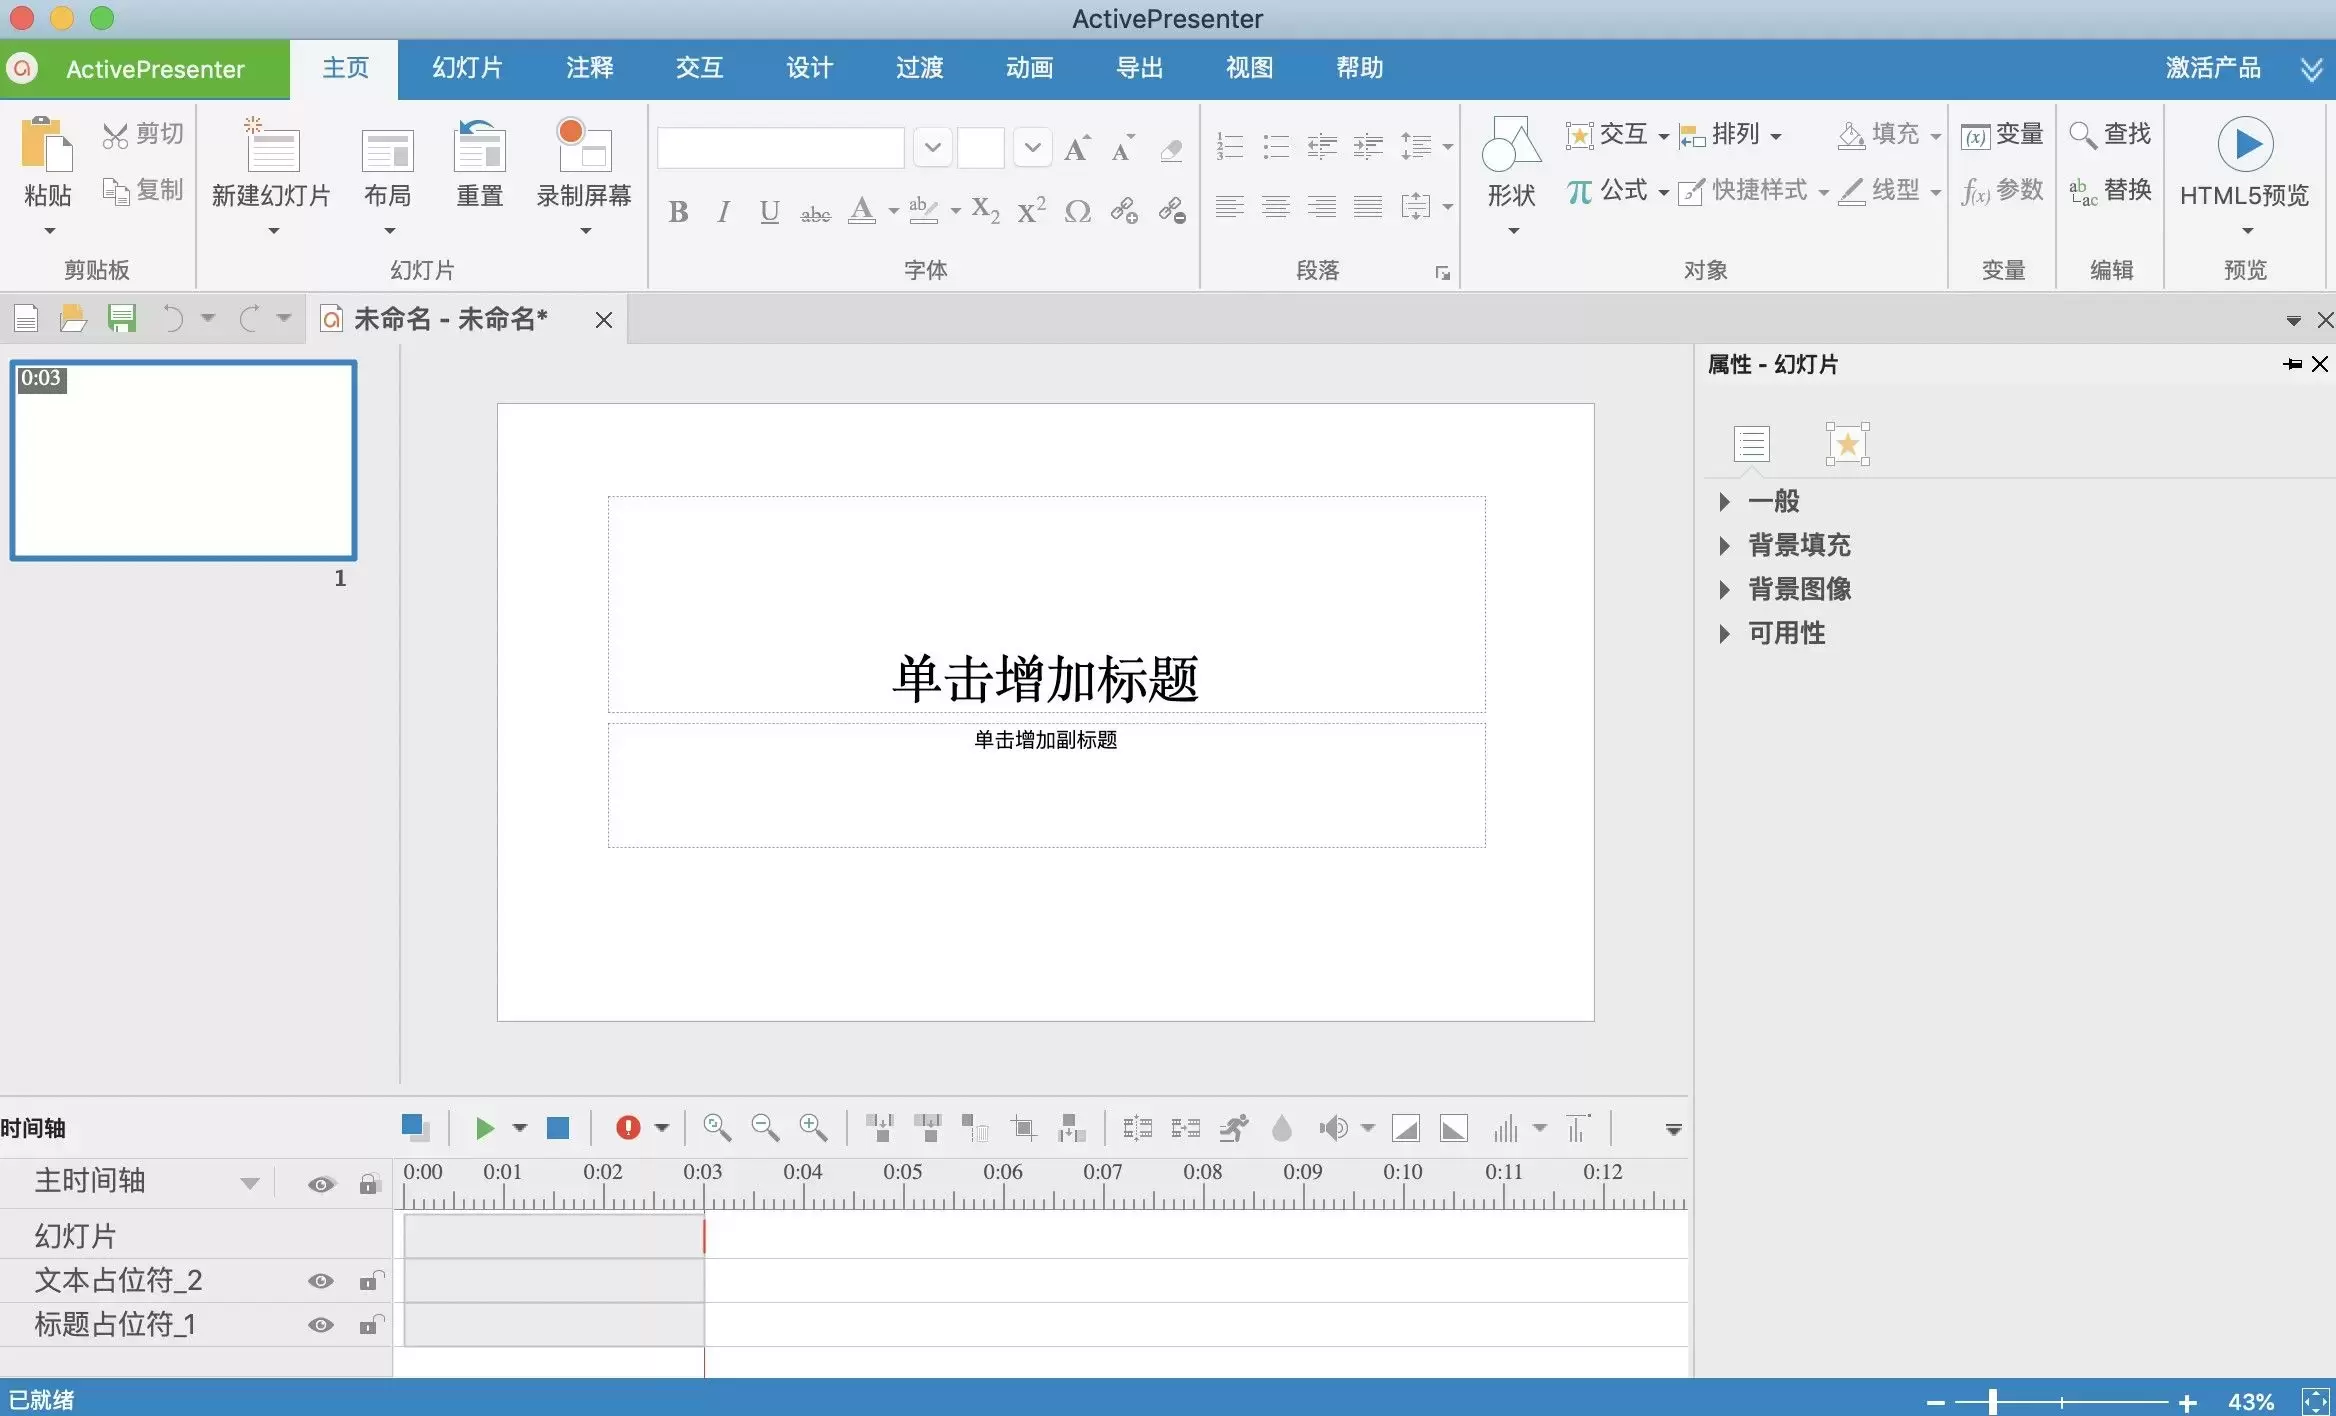 [MAC]ActivePresenter for Mac(屏幕录像工具) 9.0.3官方中文版 支持M1/M2插图6